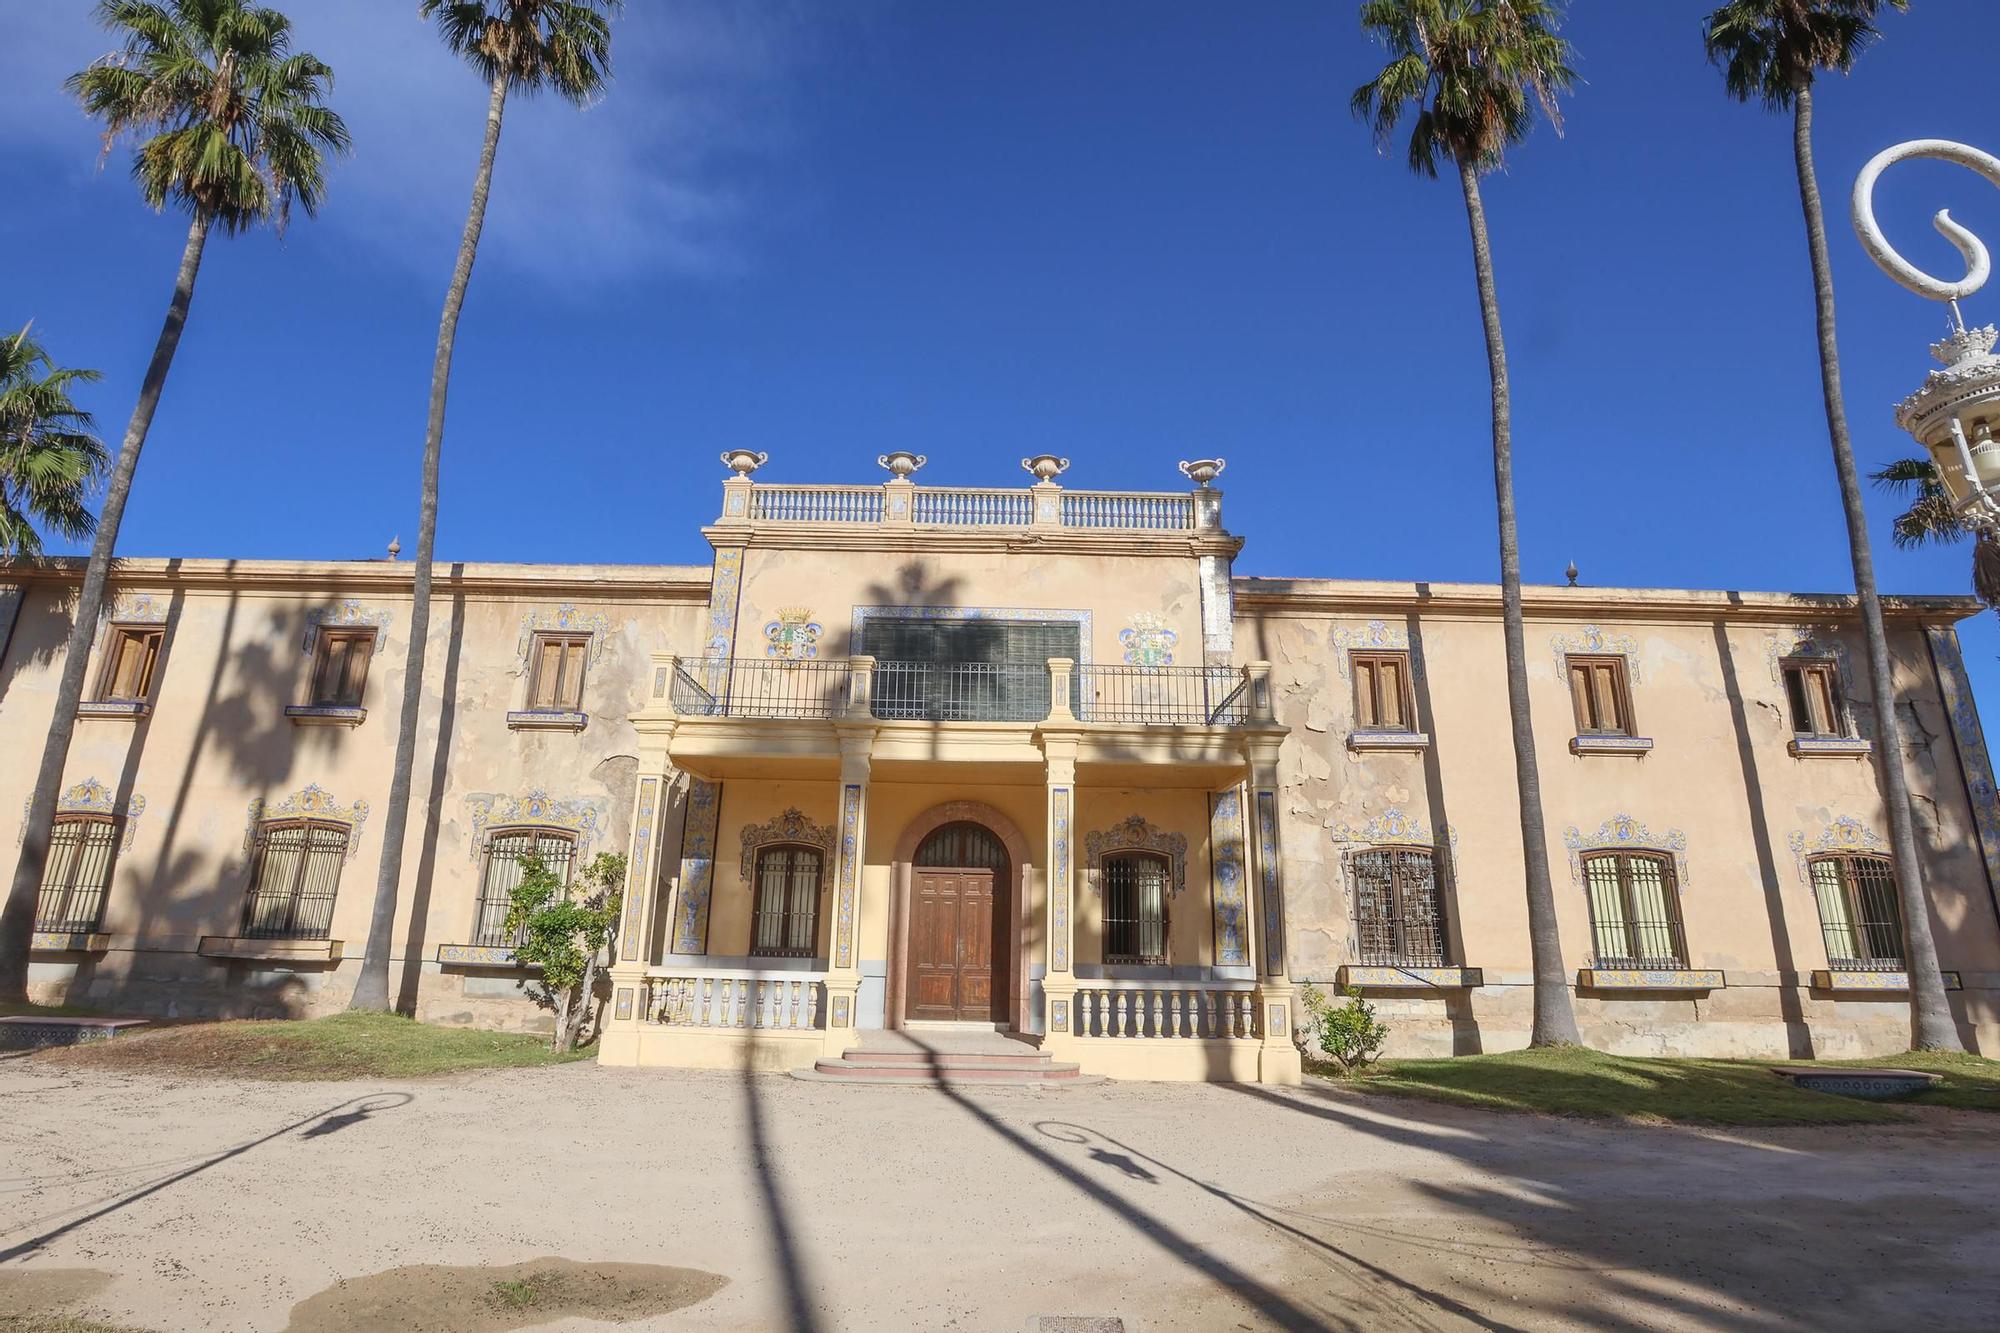 Jacarilla quiere rehabilitar la espectacular Casa Palacio del Marqués de Fontalba